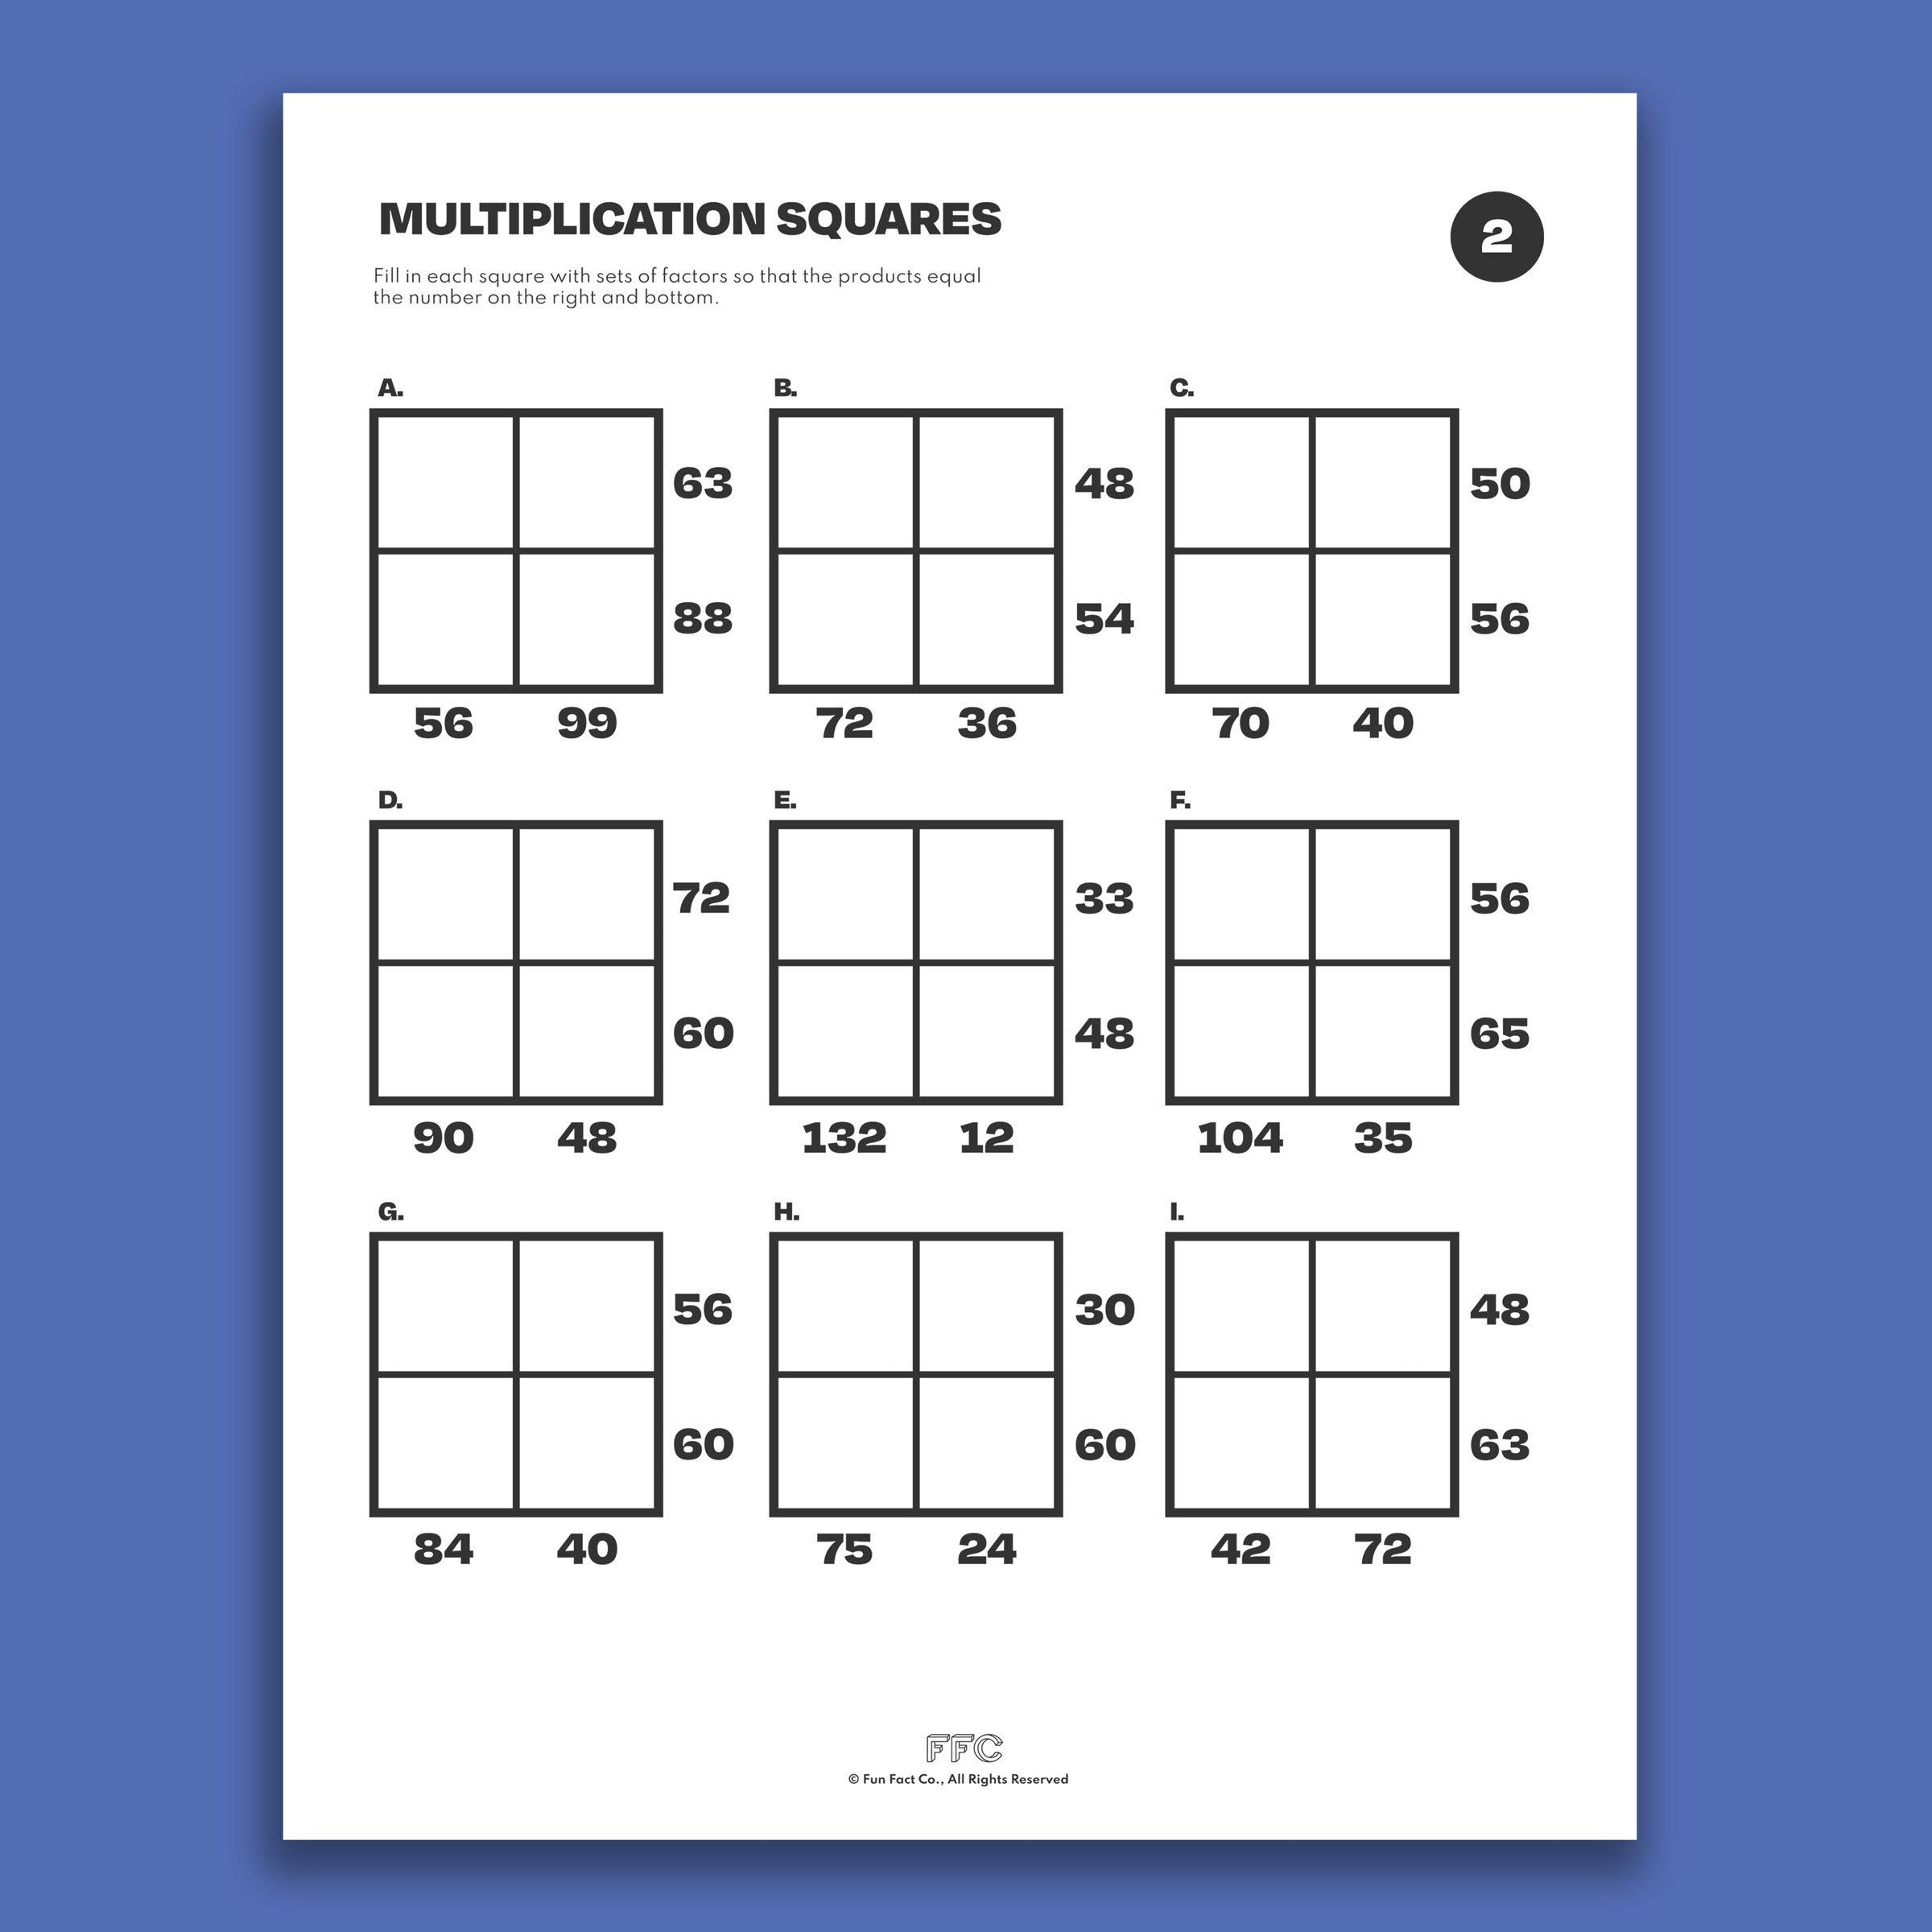 Multiplication Squares math worksheet